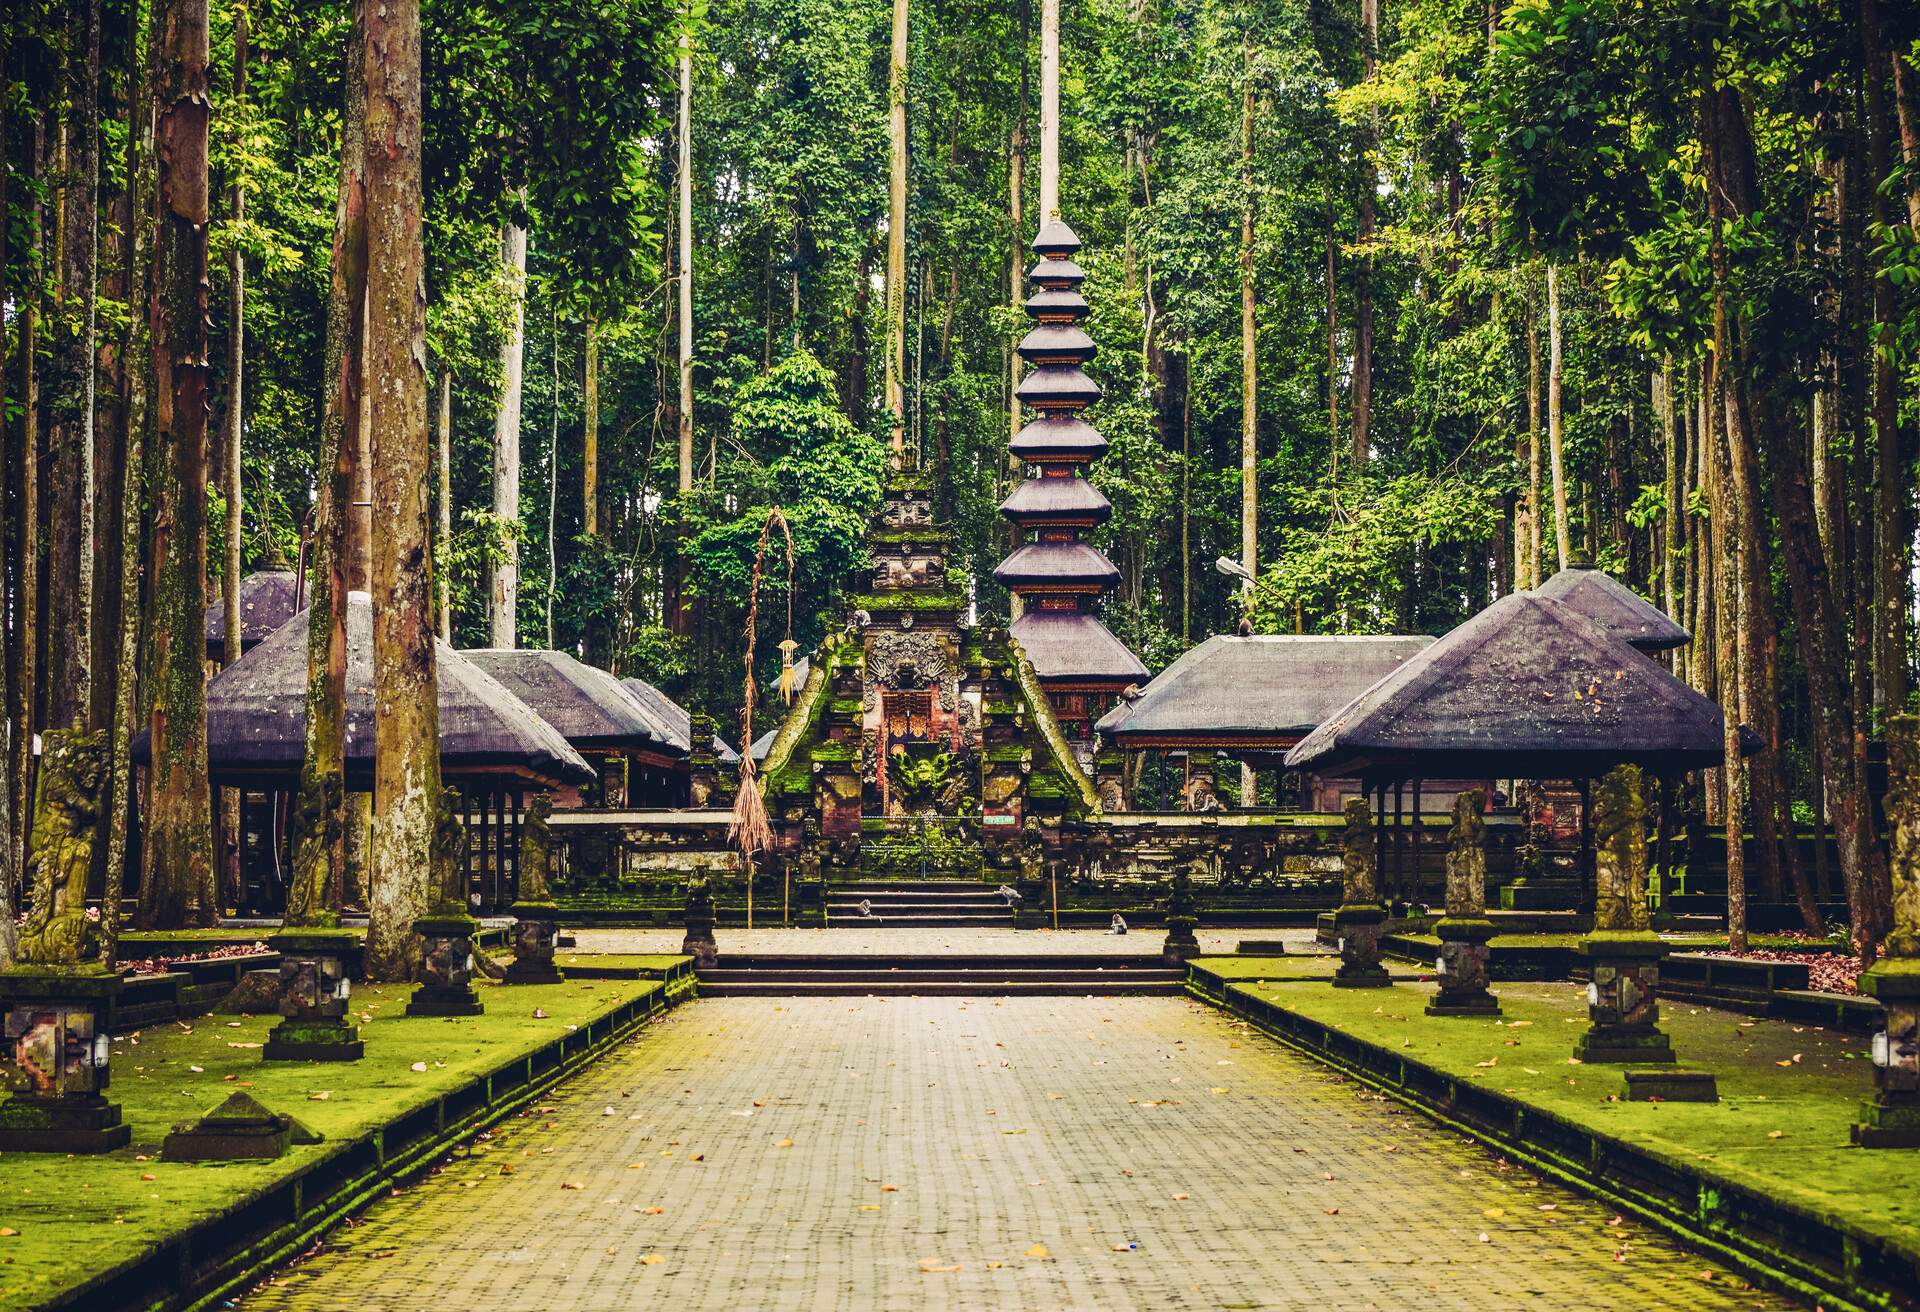 DEST_INDONESIA_UBUD_BALI_SACRED-MONKEY-FOREST-SANCTUARY_GettyImages-619236614